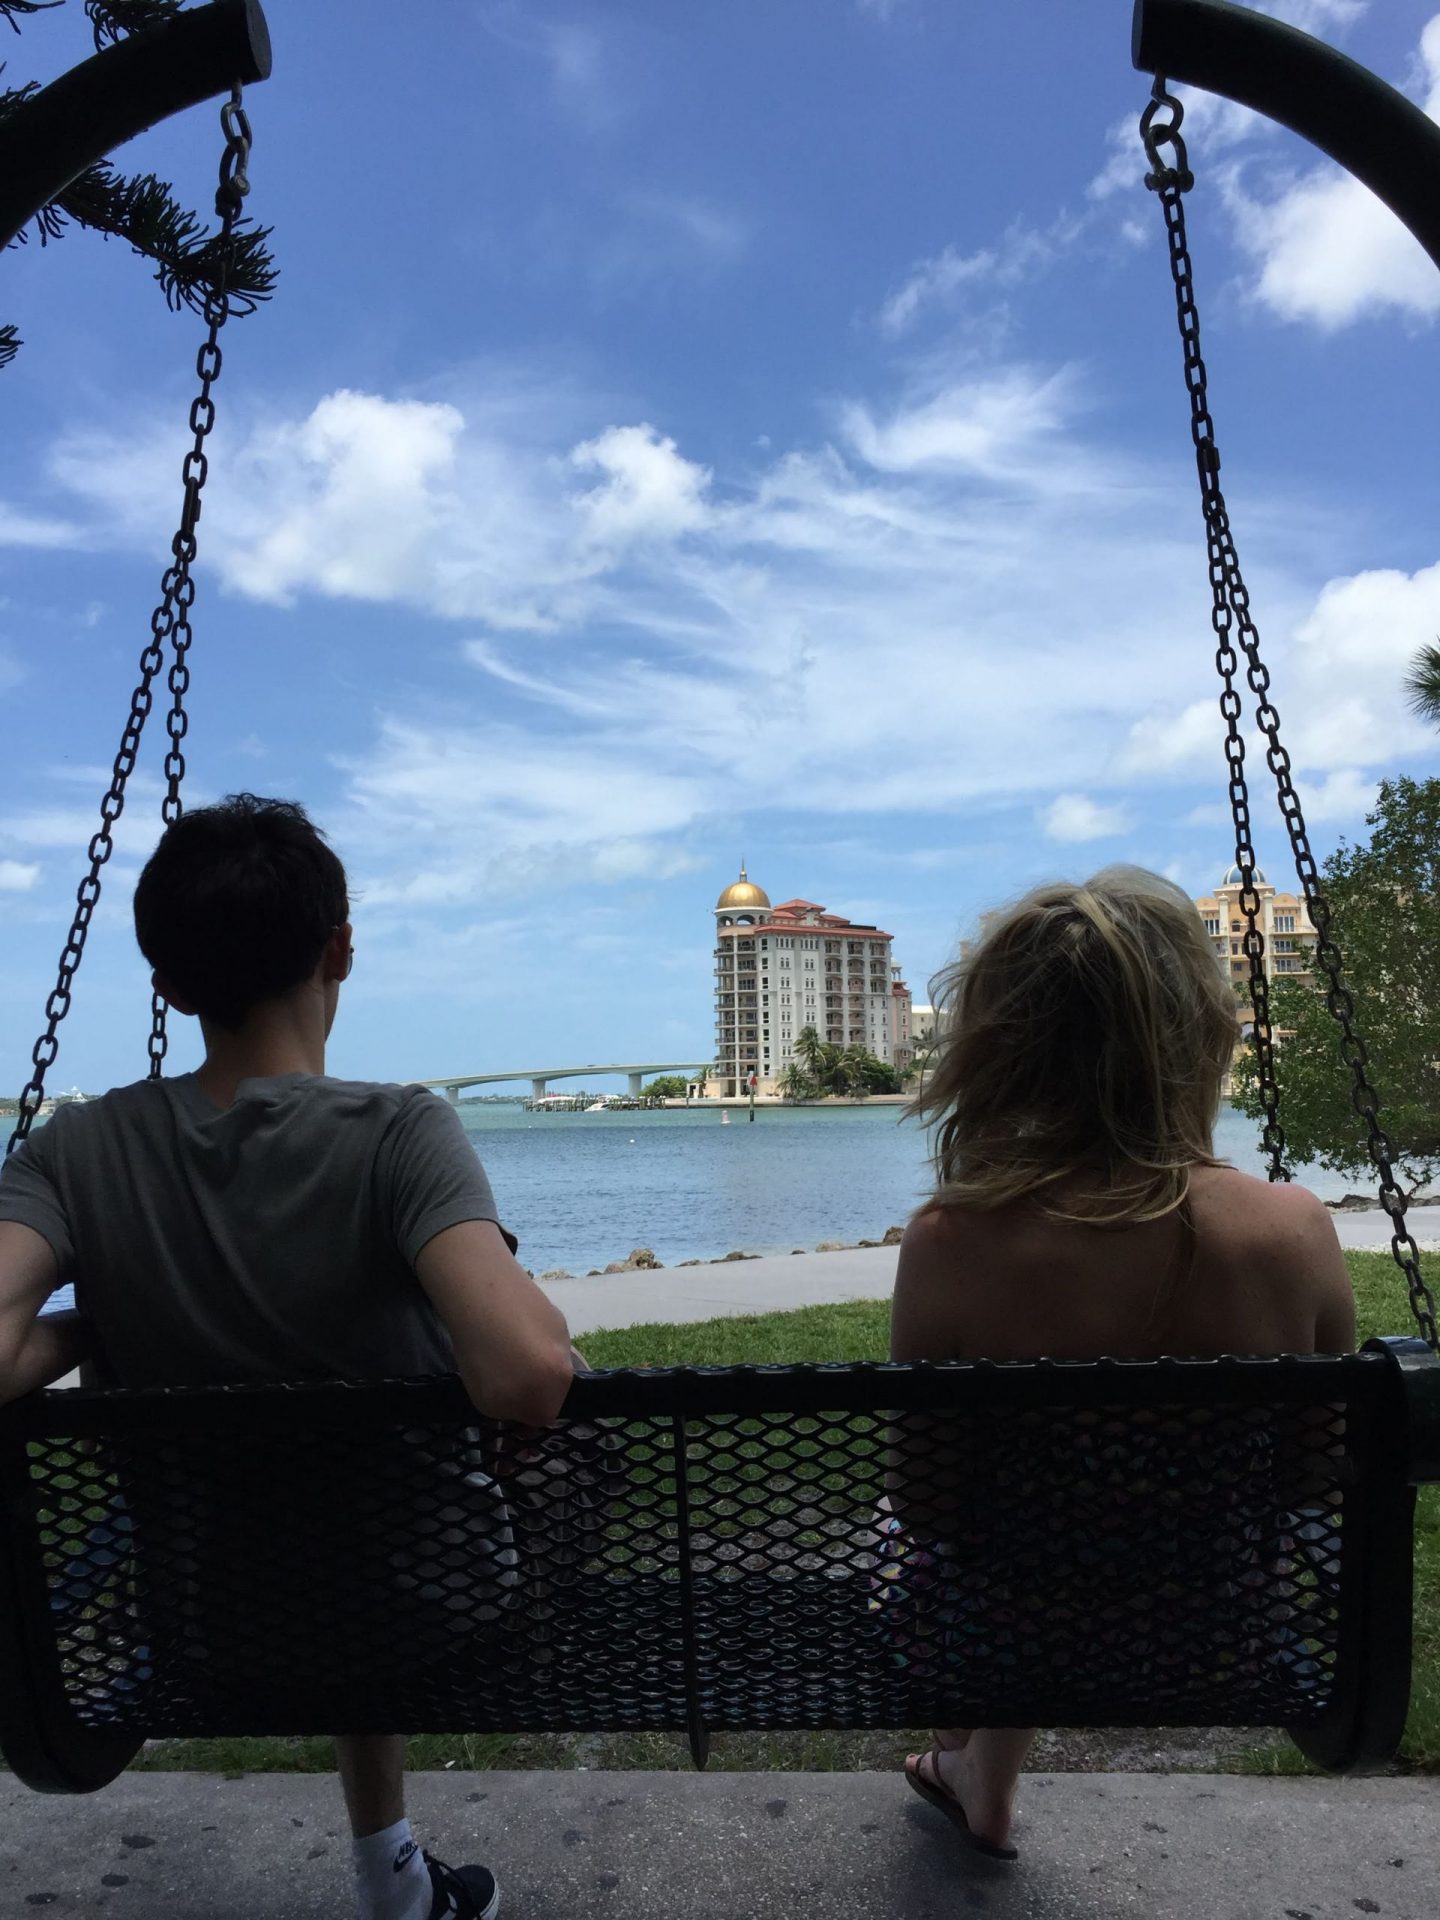 Looking out at Sarasota